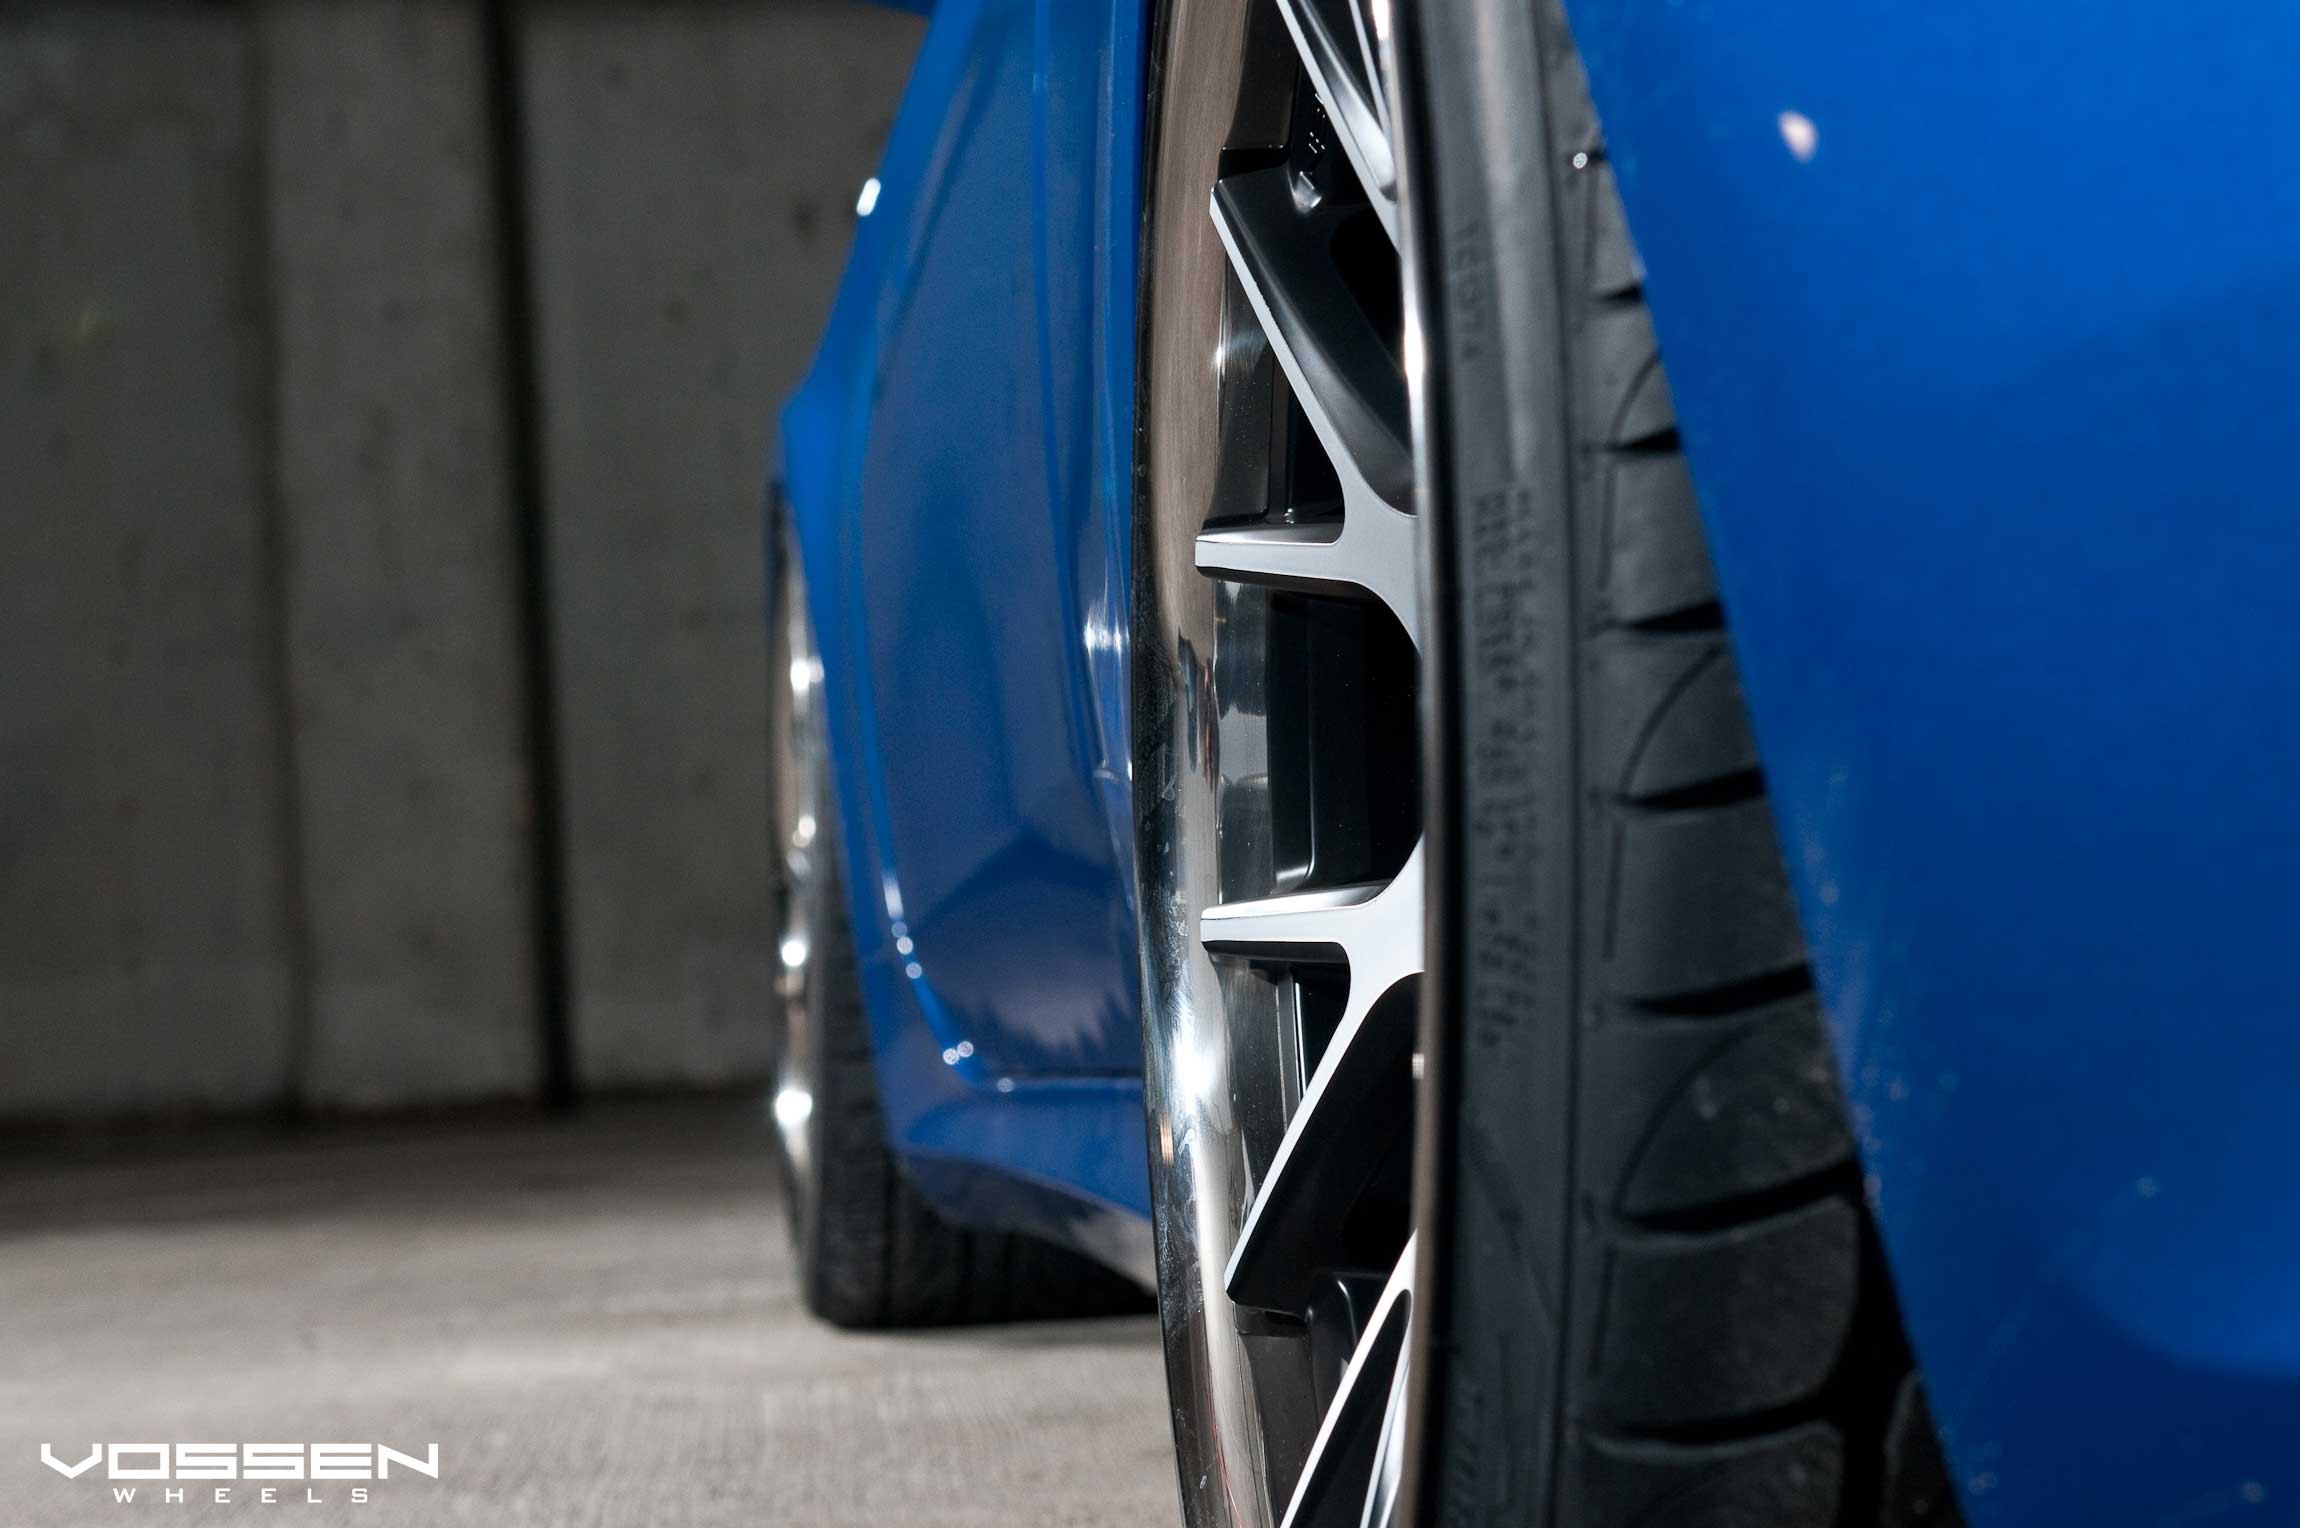 Blue Hyundai Genesis Coupe with Chrome VFS Vossen Wheels - Photo by Vossen